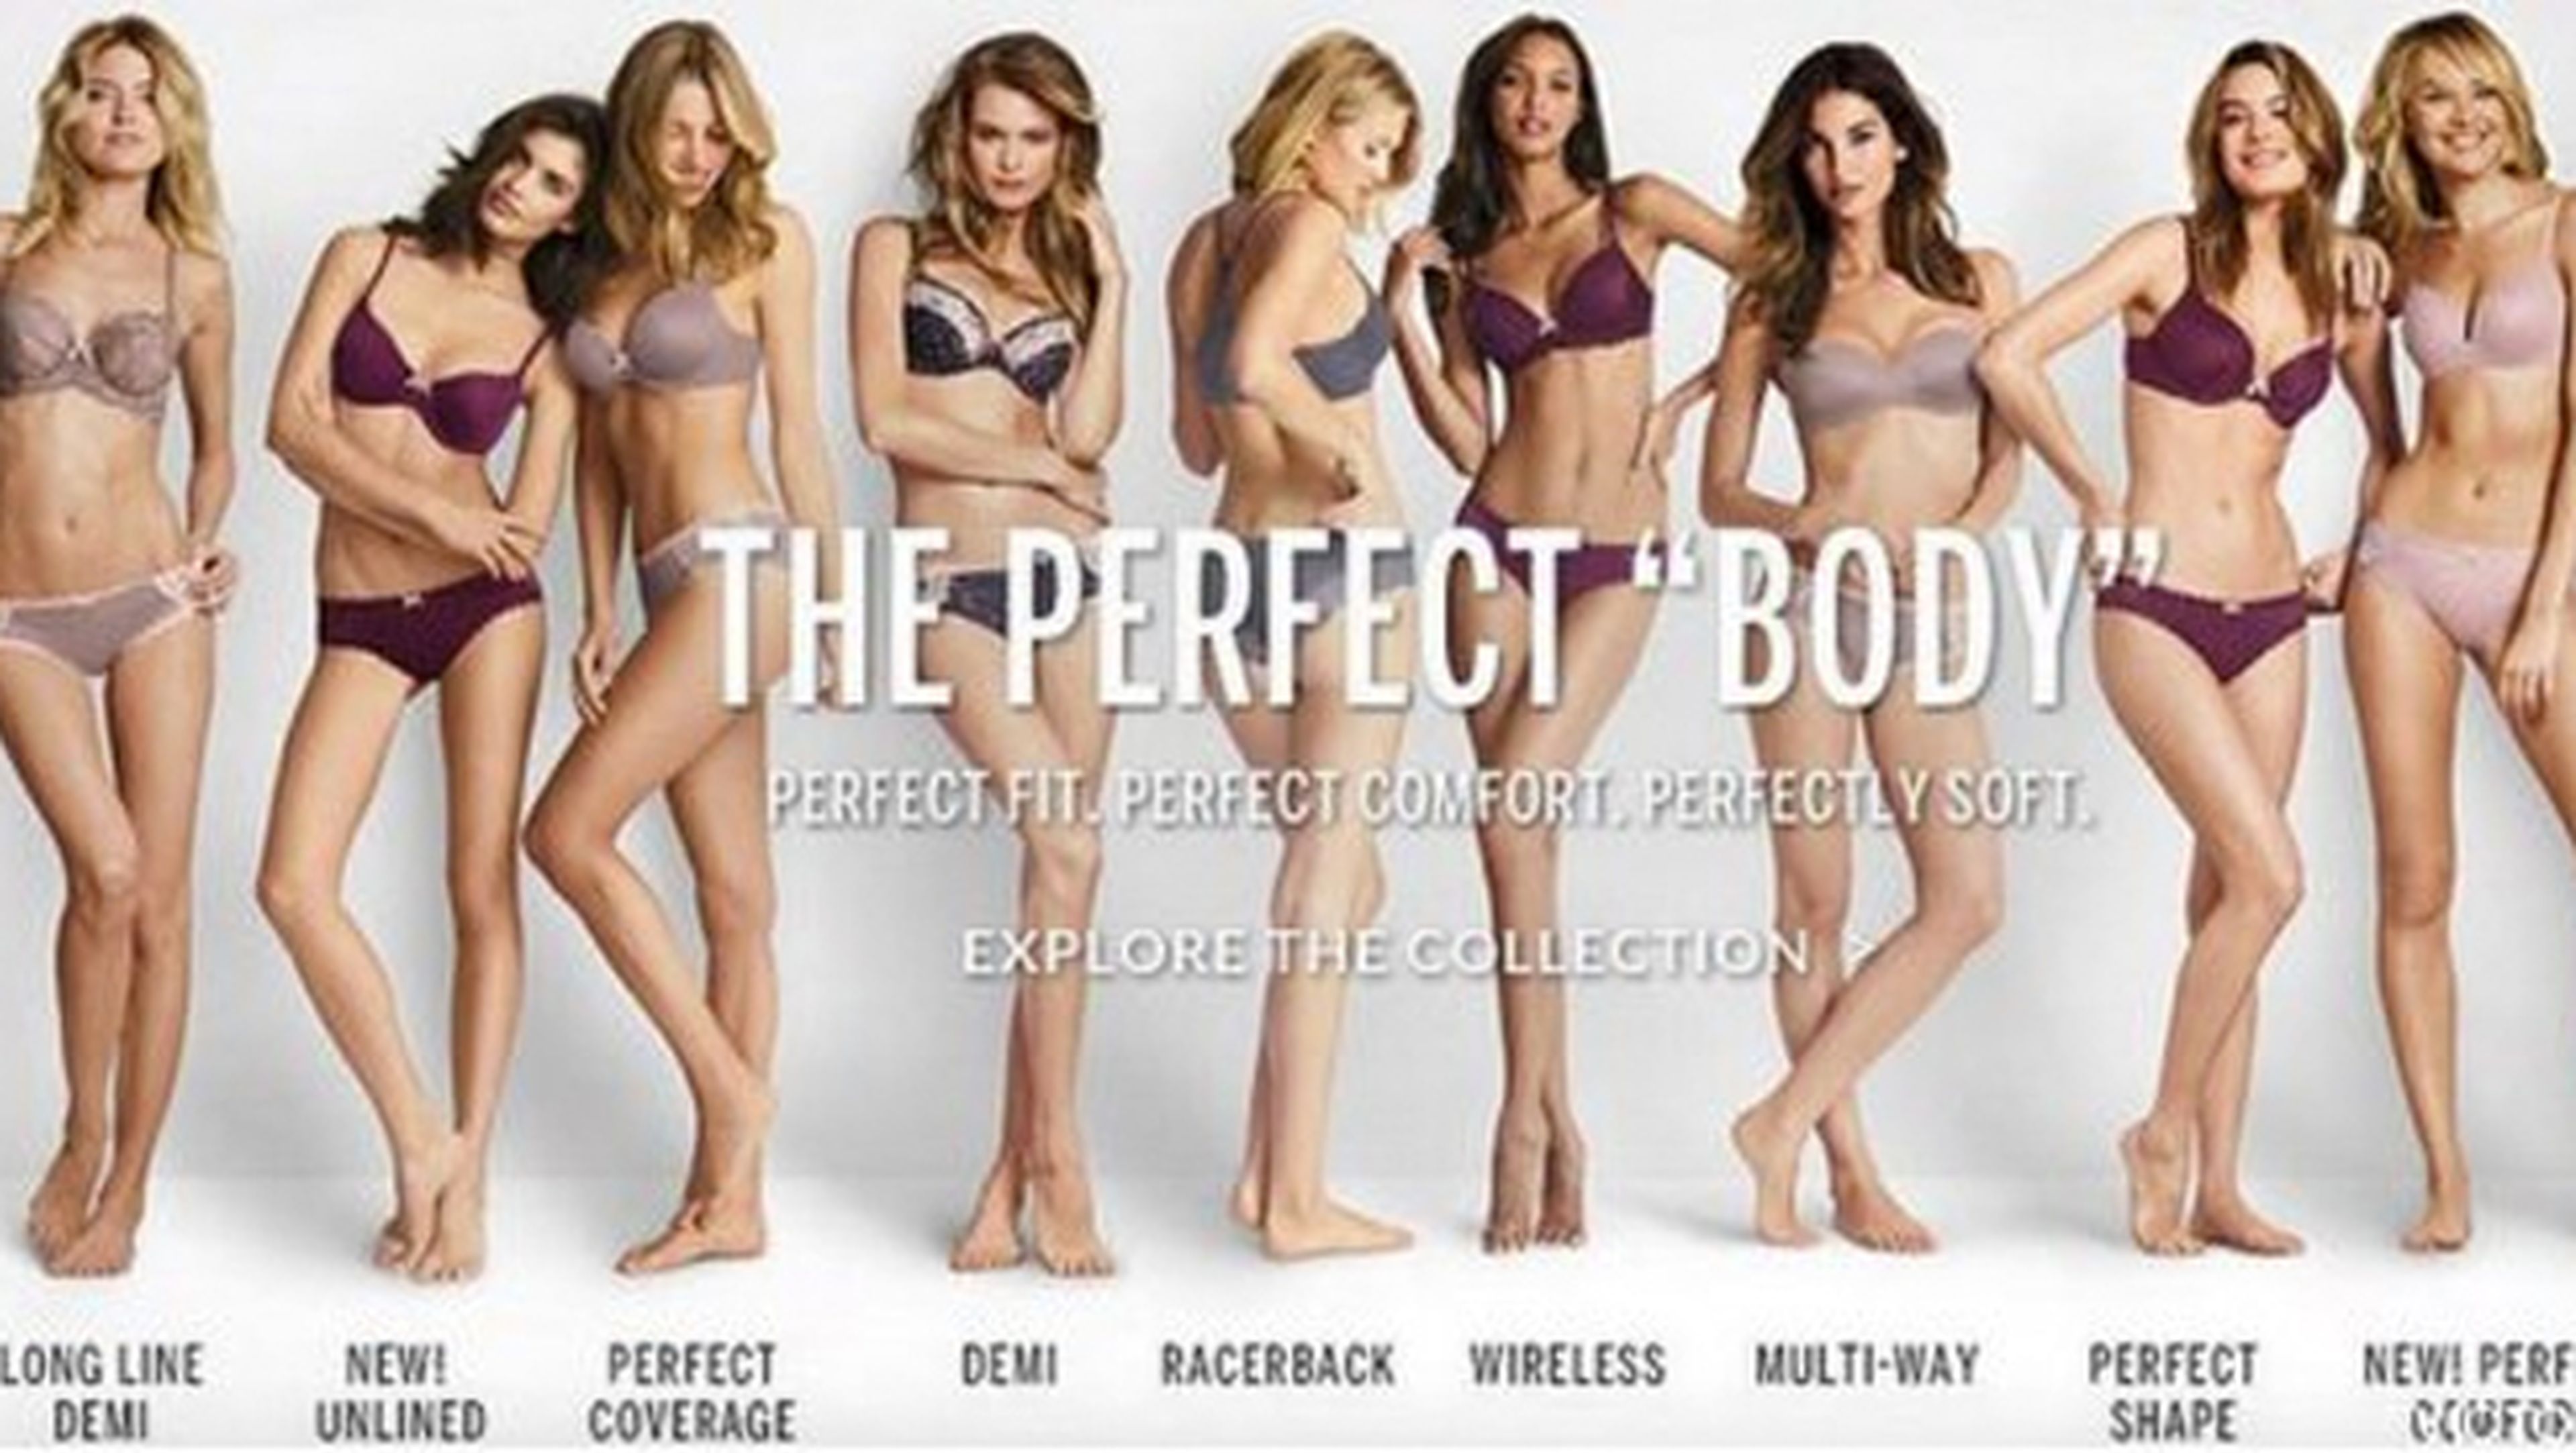 Las modelos de Victoria Secret levantan polémica en Internet